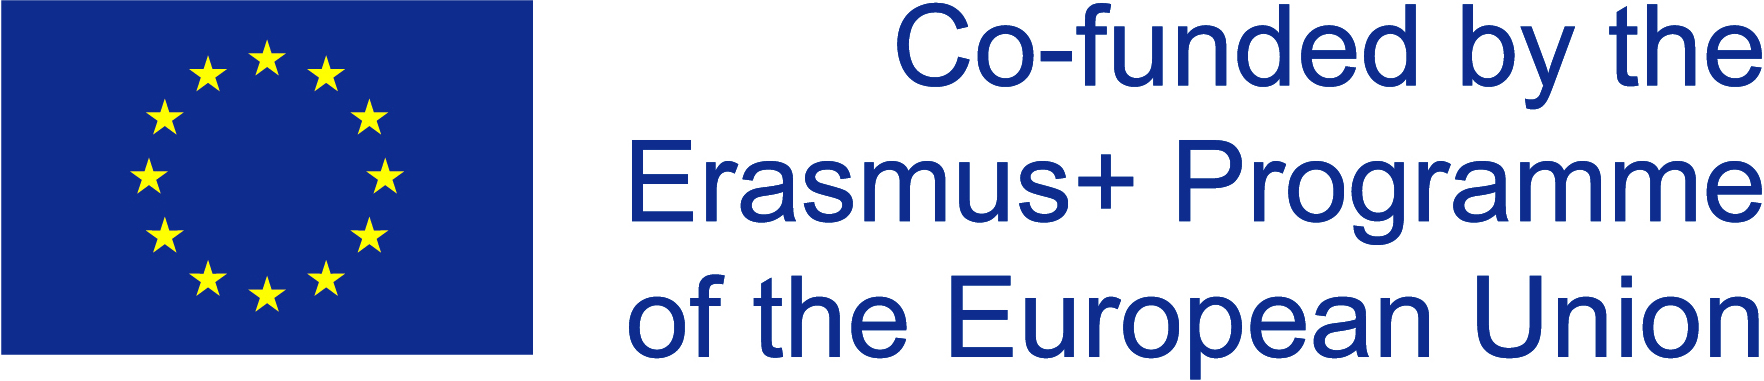 EU logo bg resize